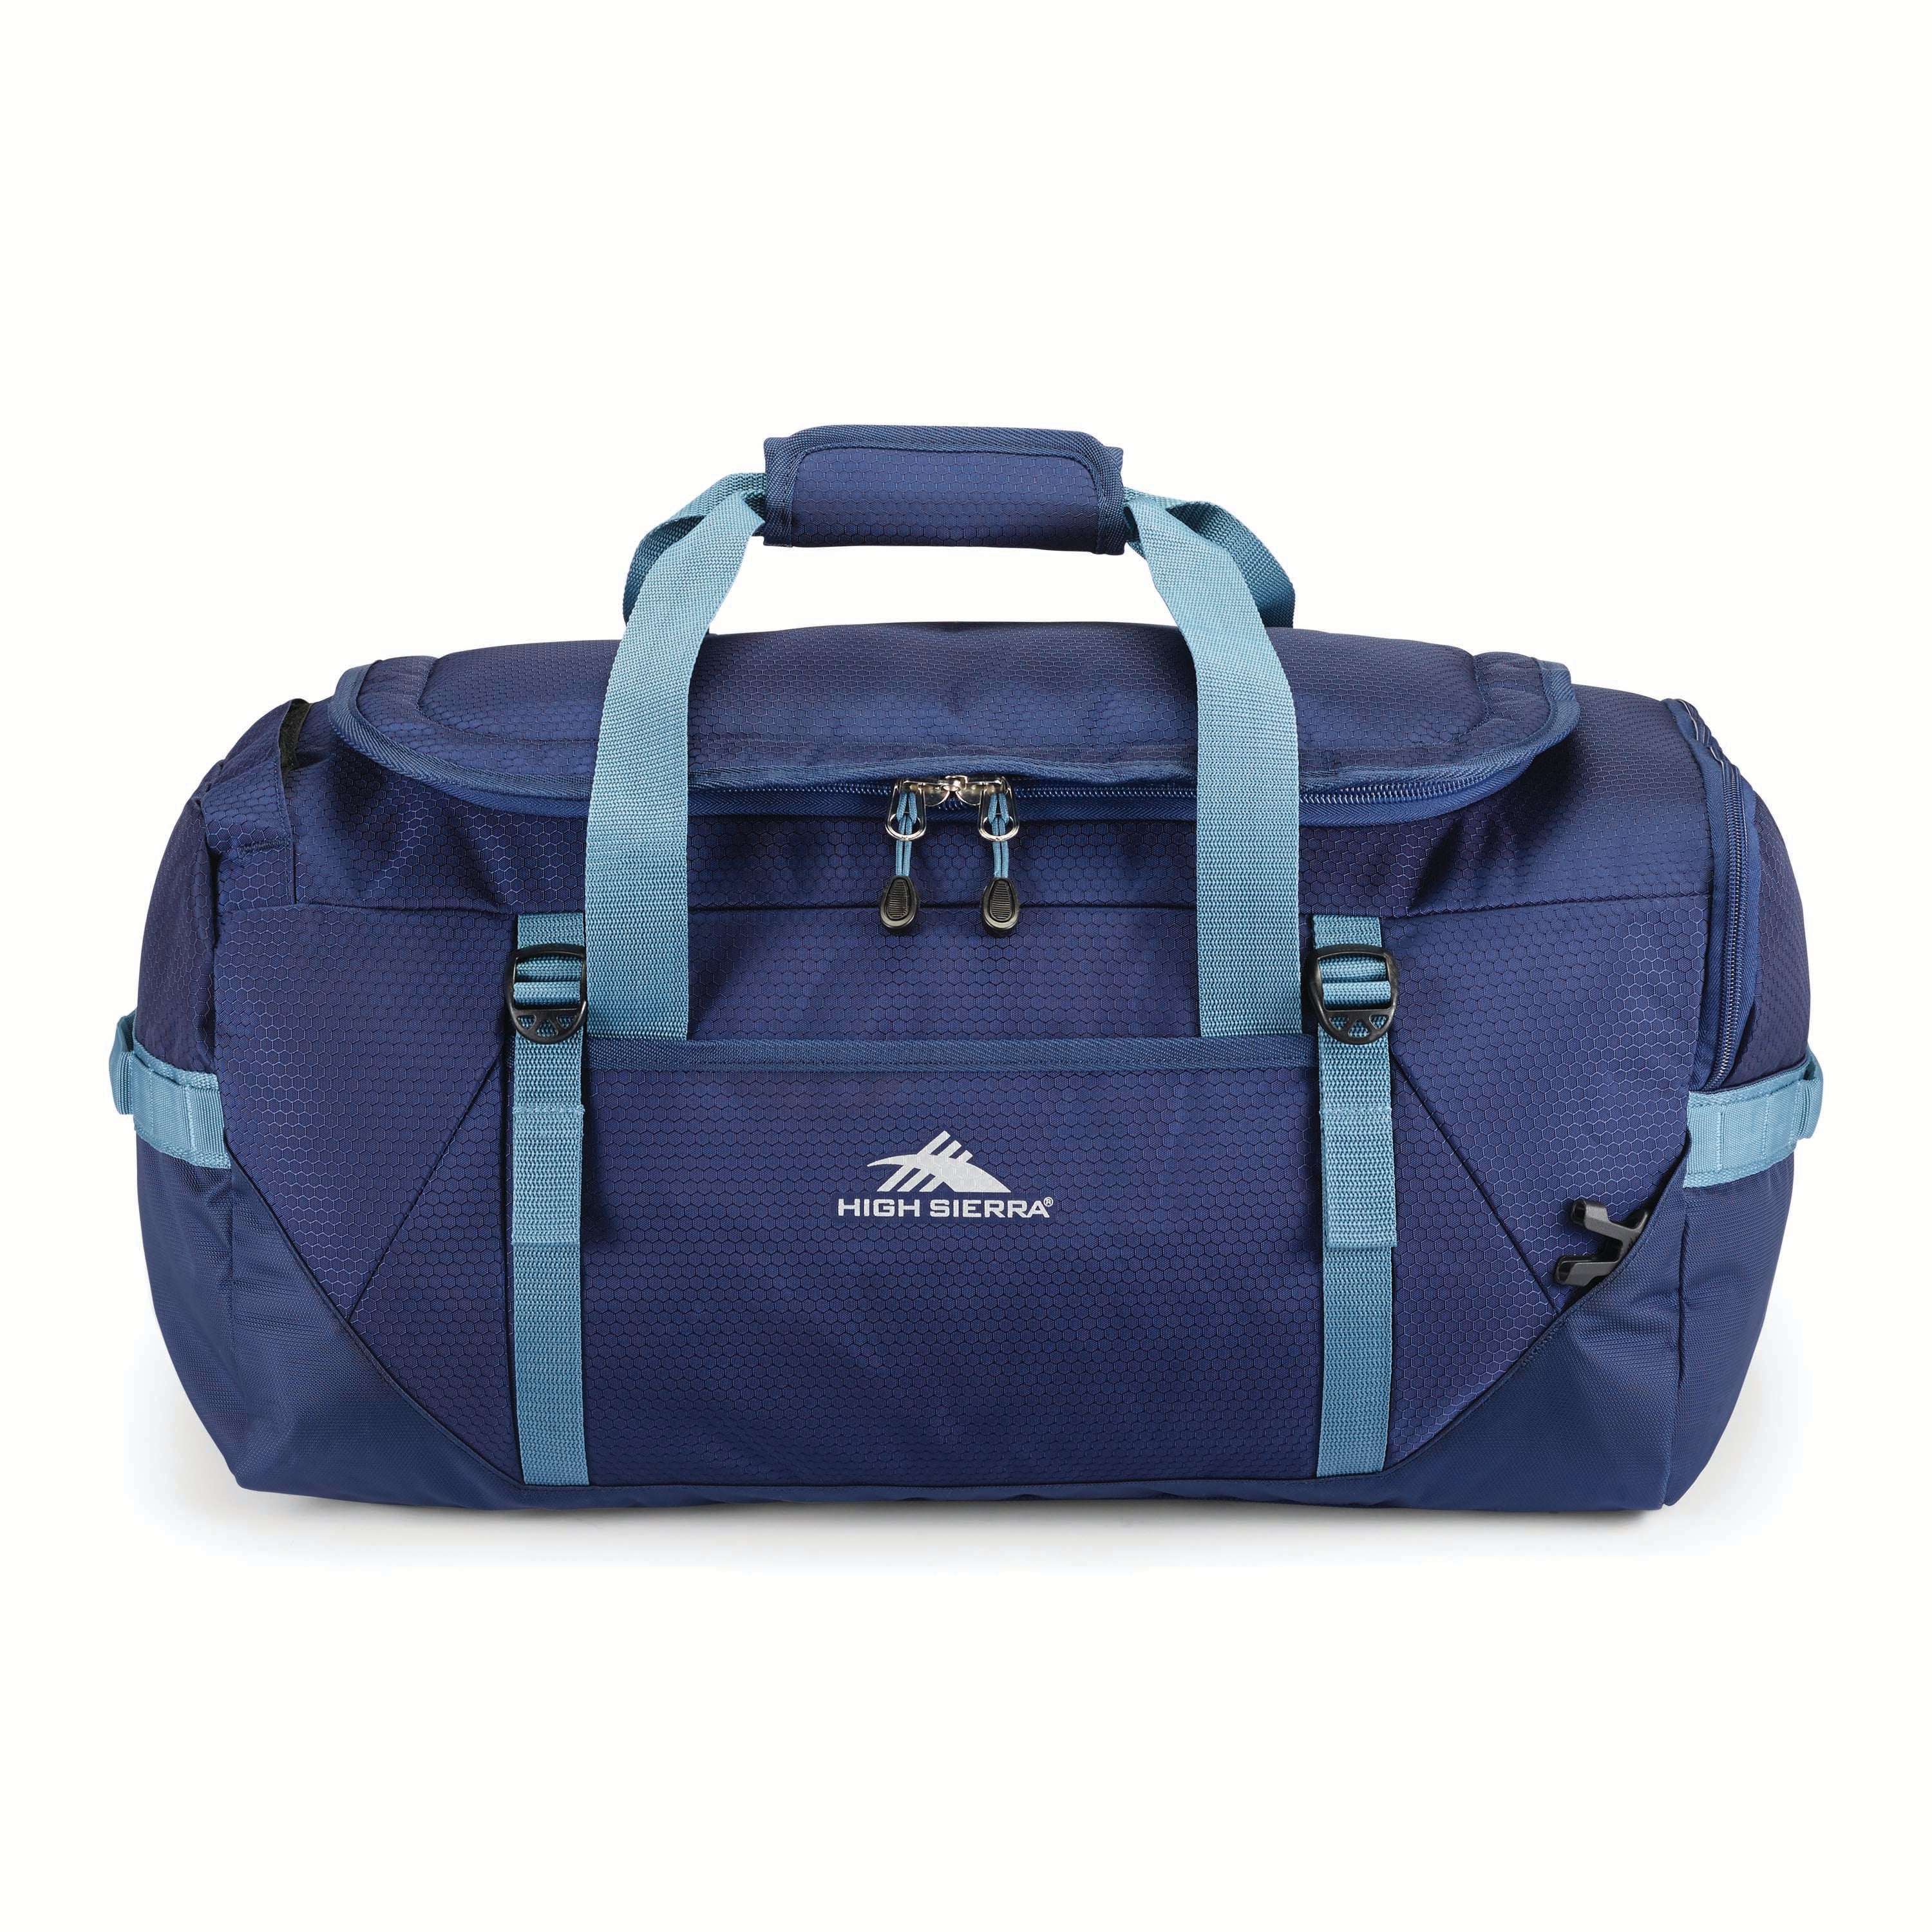 High Sierra - Convertable Backpack-Duffle - Navy-Graphite Blue - 0